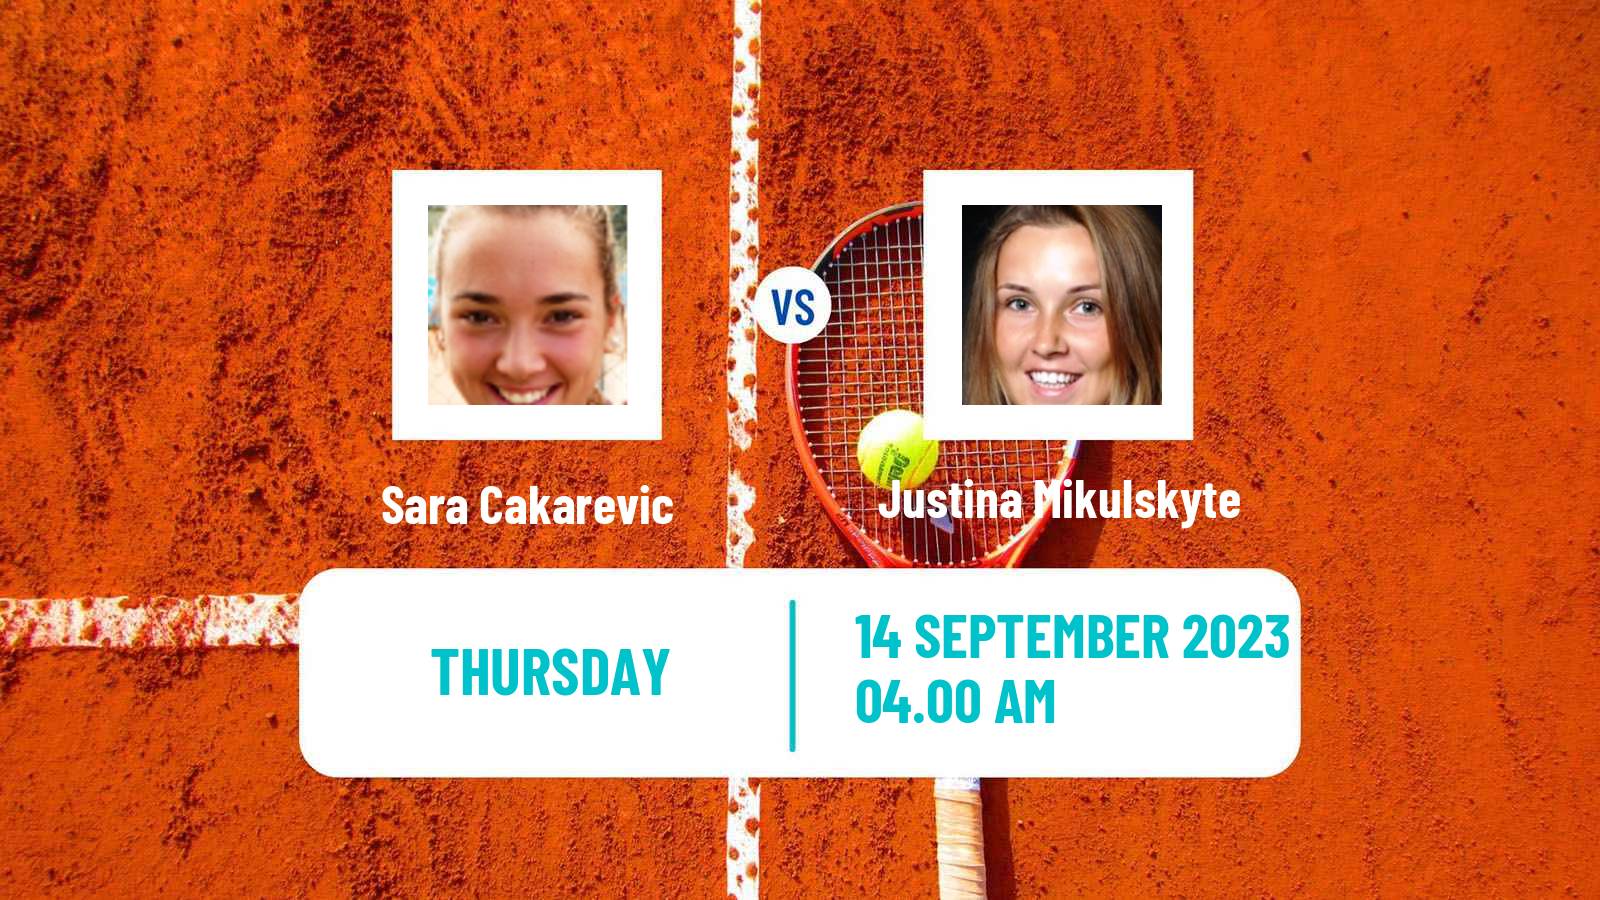 Tennis ITF W40 Skopje Women Sara Cakarevic - Justina Mikulskyte